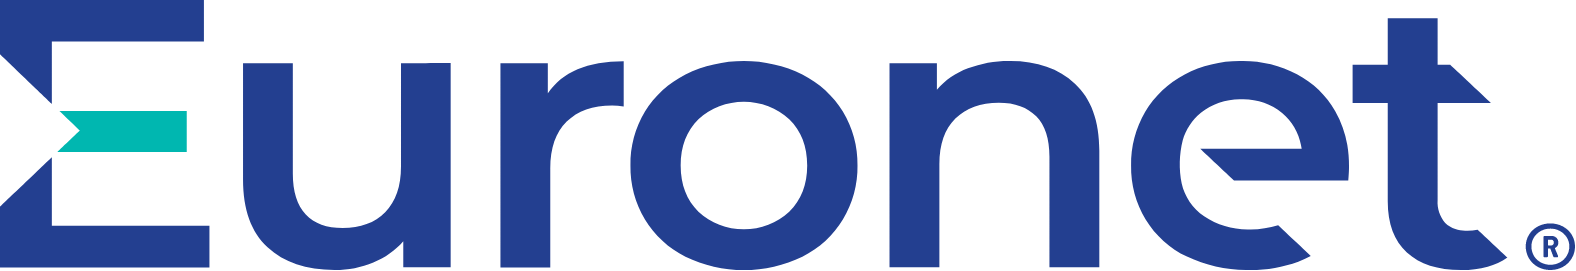 Euronet Worldwide
 logo large (transparent PNG)